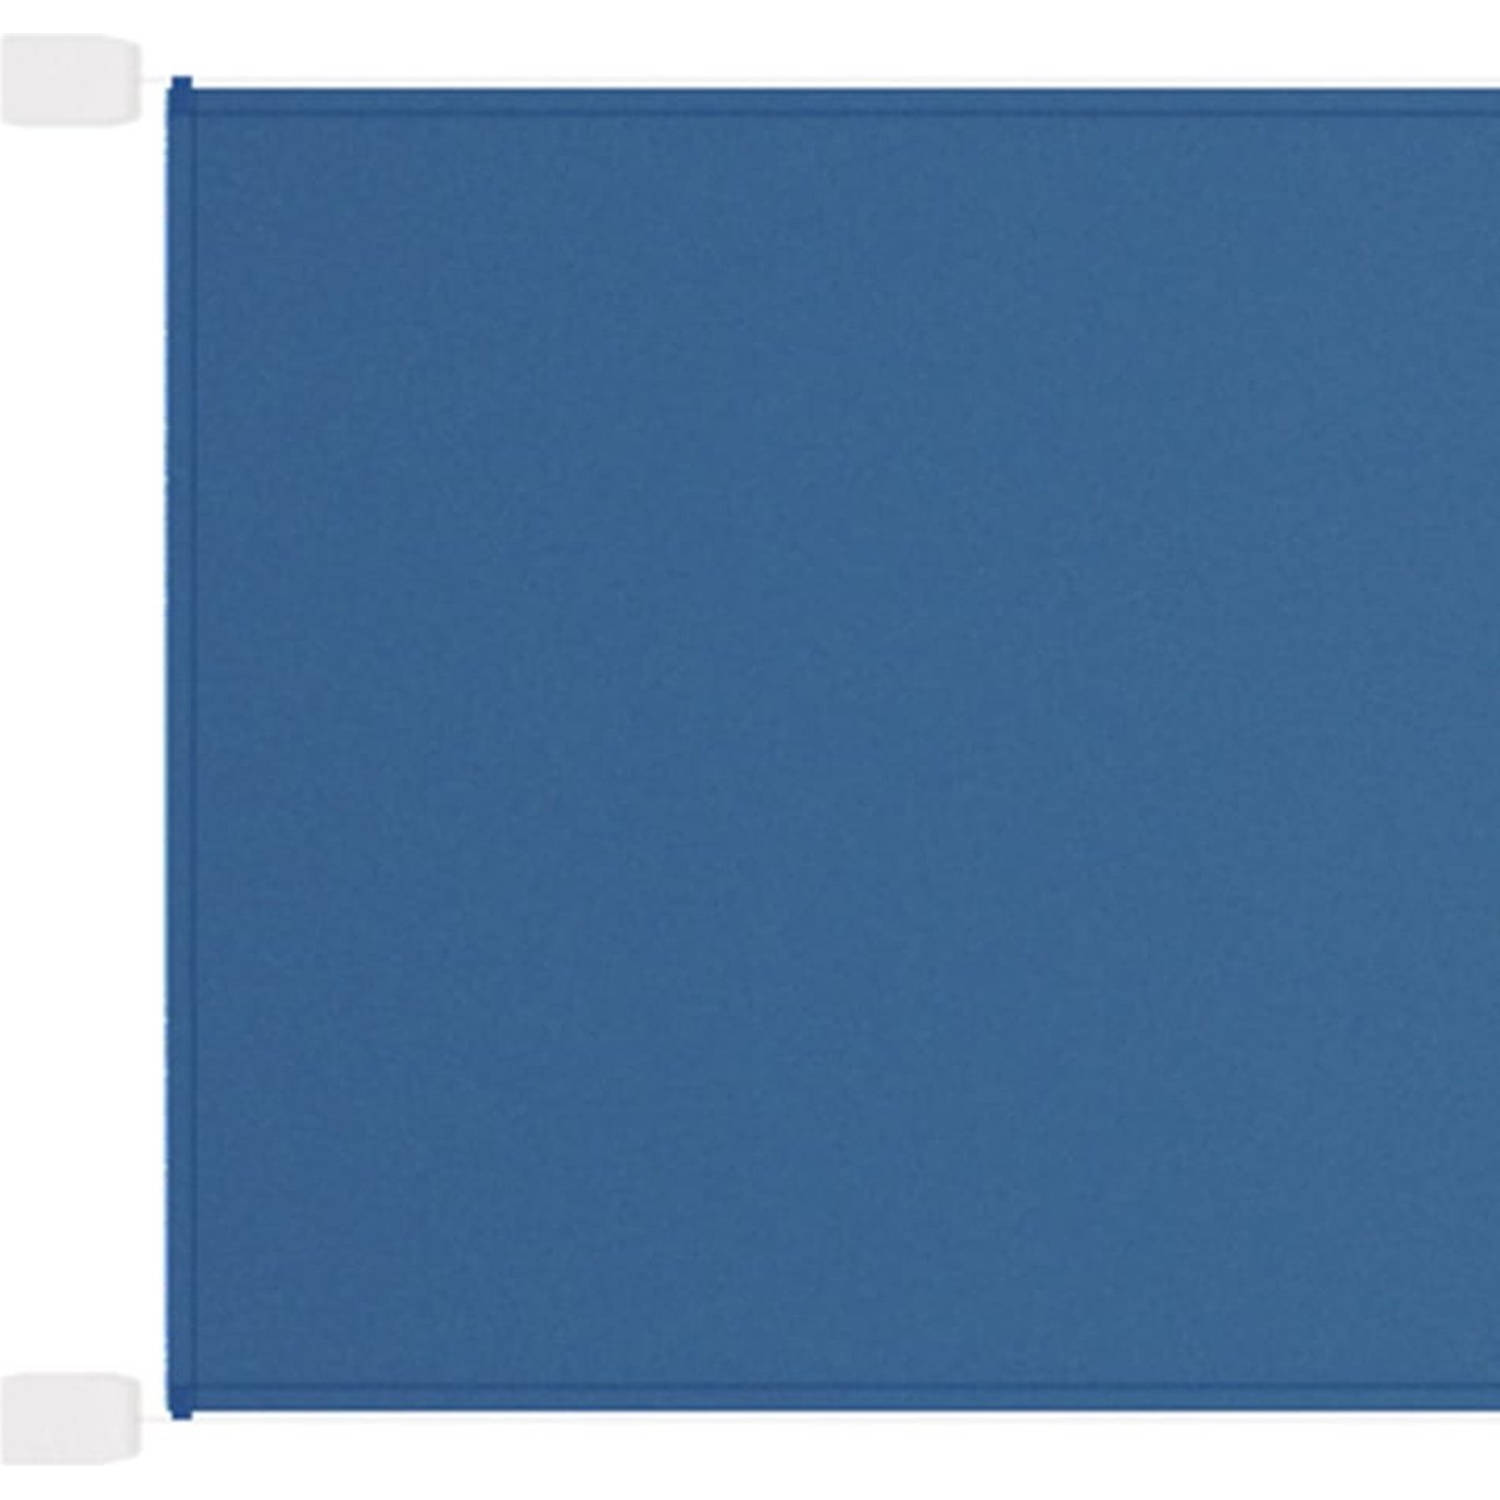 The Living Store Verticaal Balkonscherm - Blauw - 180 x 420 cm - Oxford stof